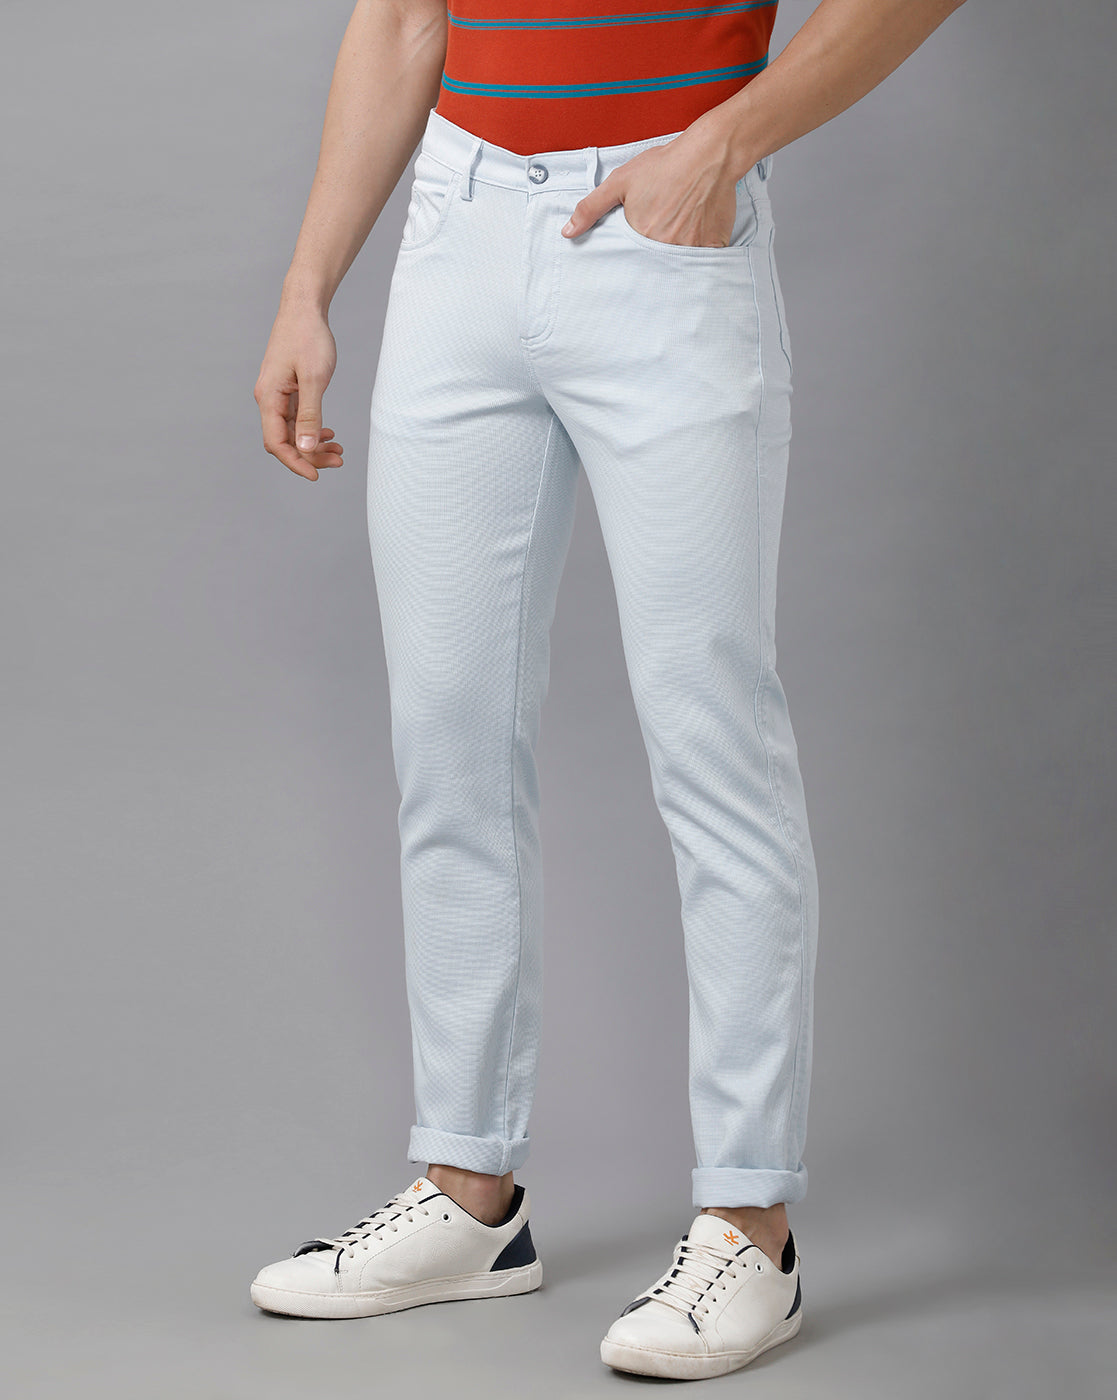 CP BRO Men's Cotton Solid Slim Fit Blue Color Trousers | Tbn2 14 A